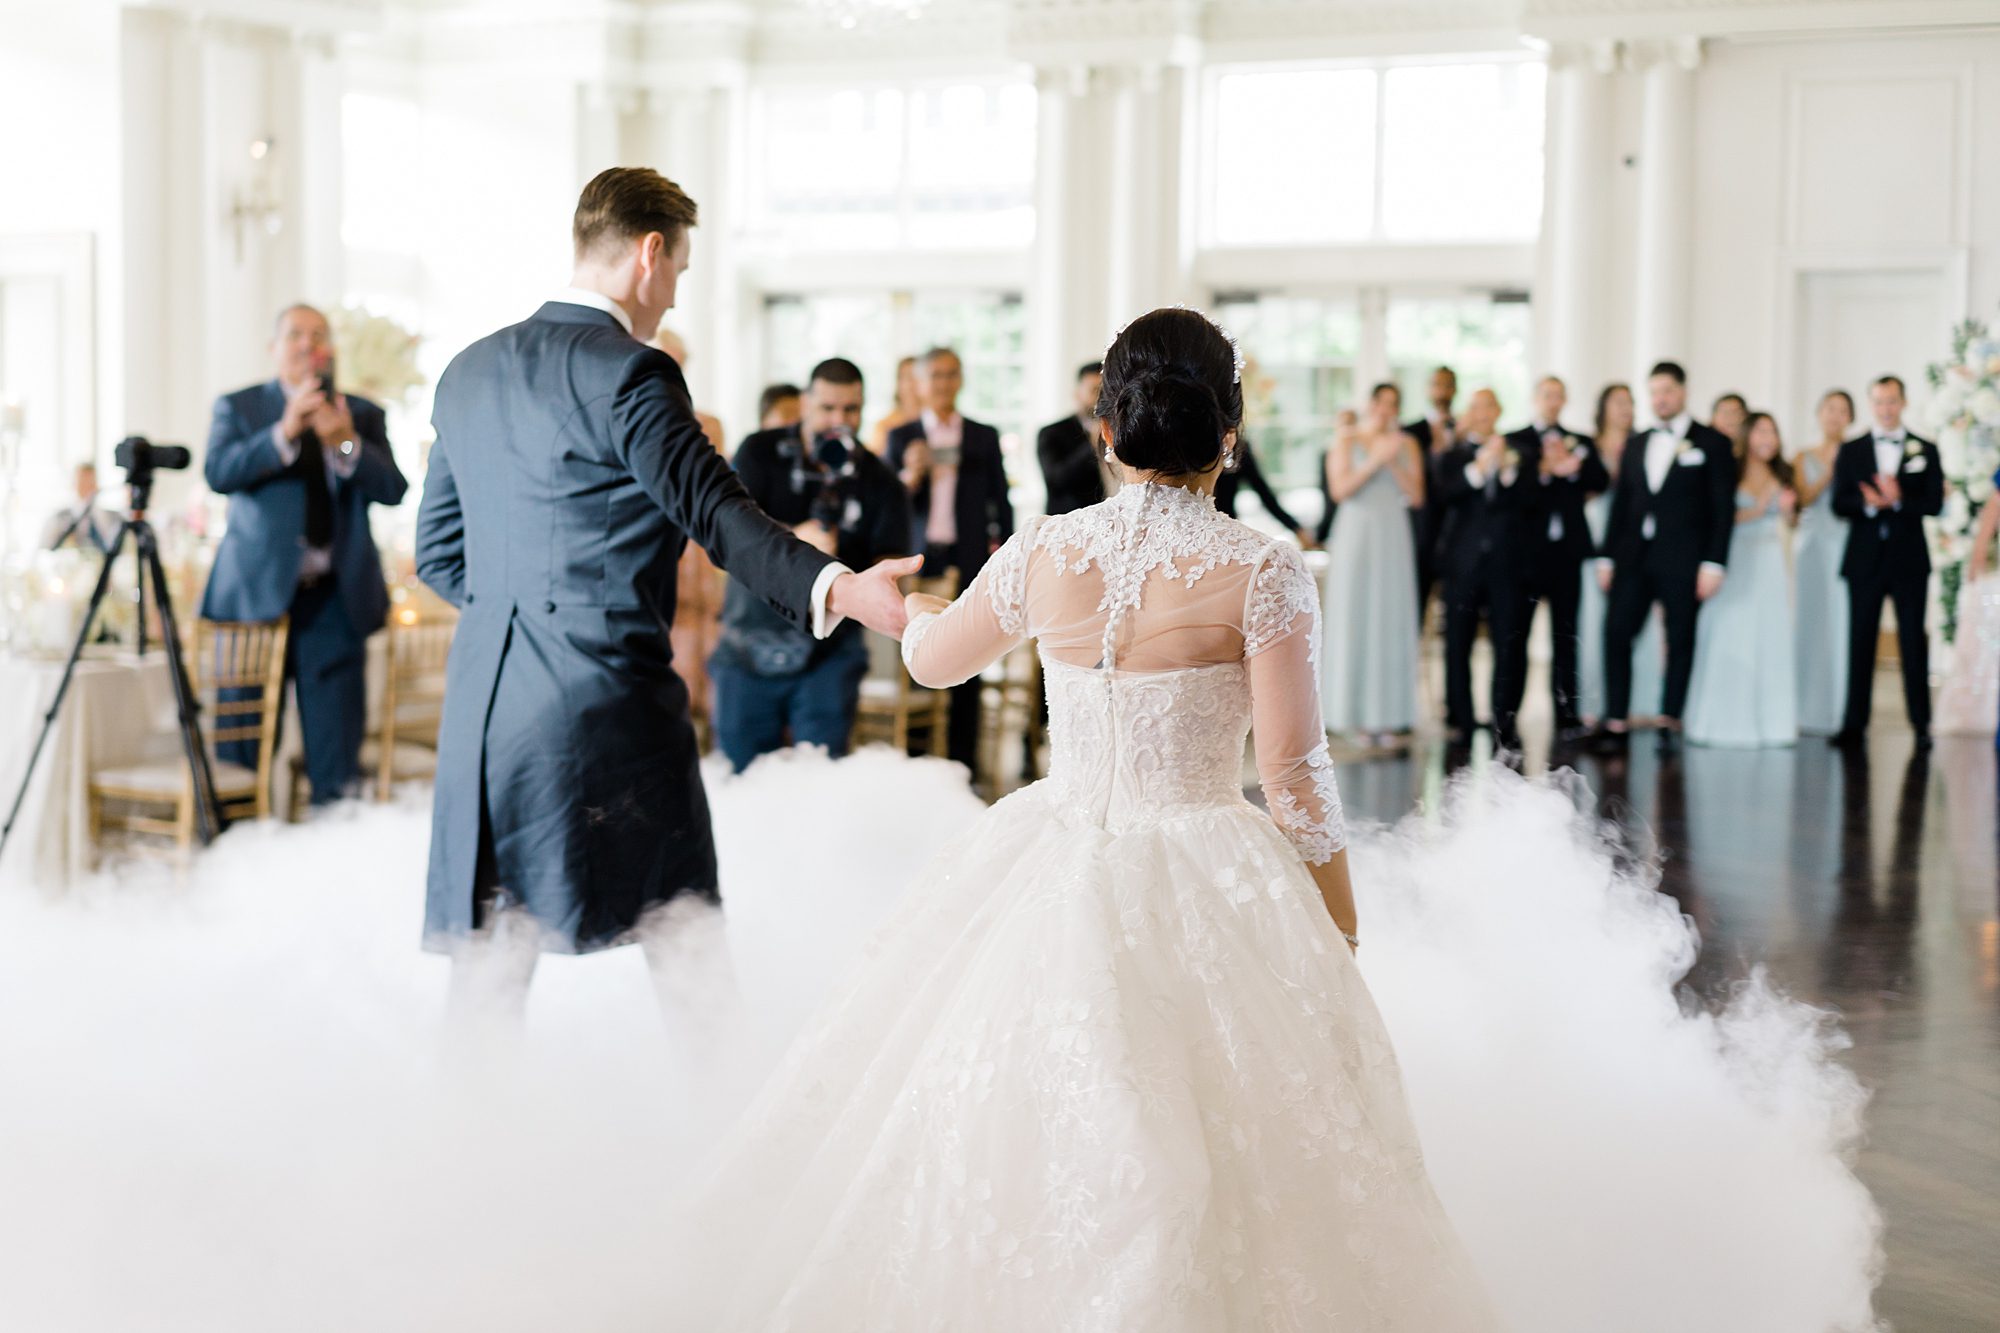 newlyweds dance together at Elegant Park Chateau Wedding reception